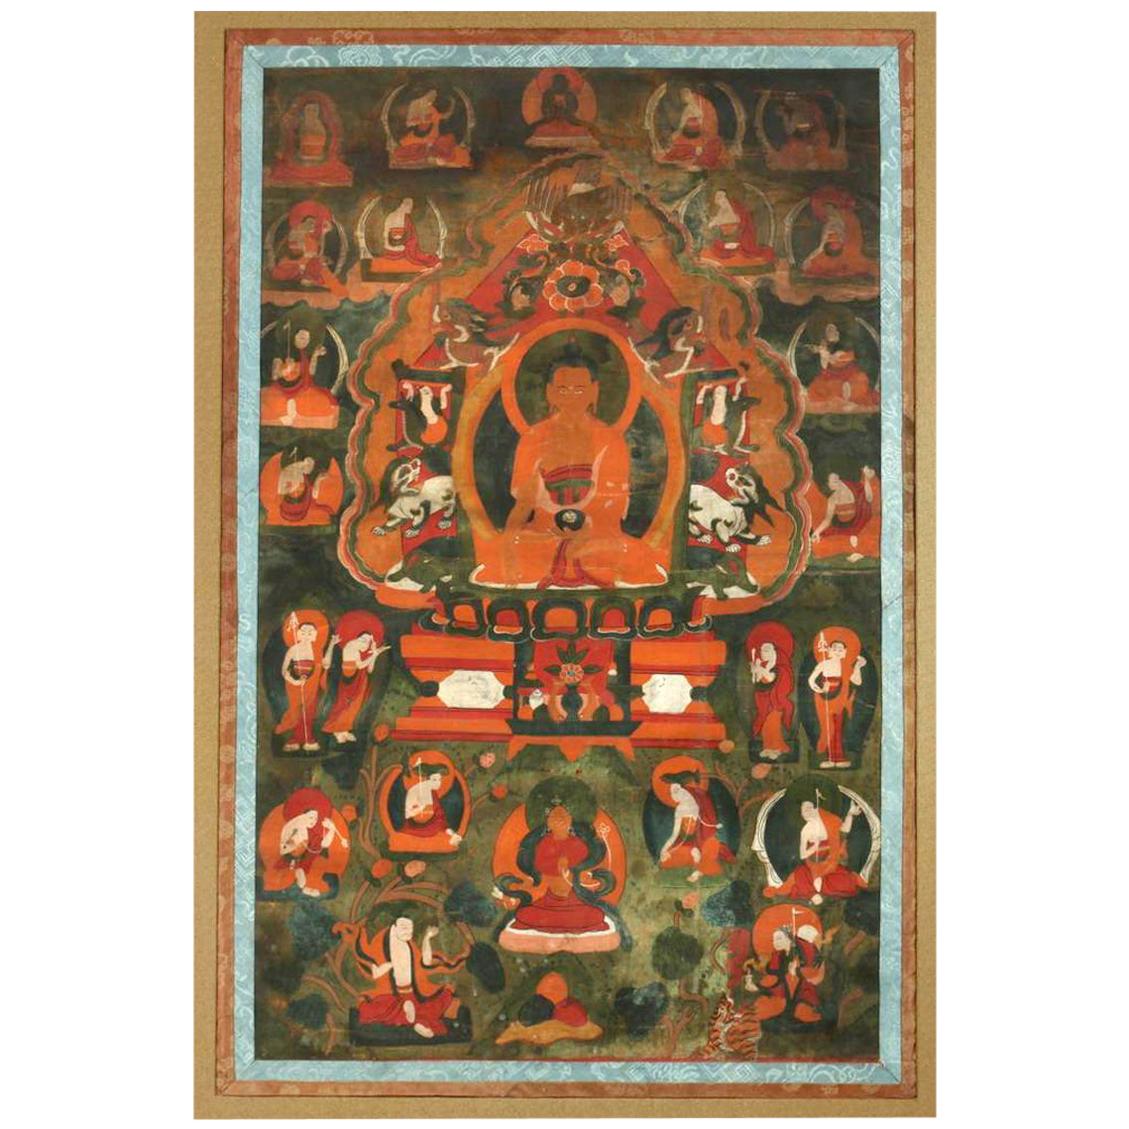 Framed Tibetan Thankga of Amitabha